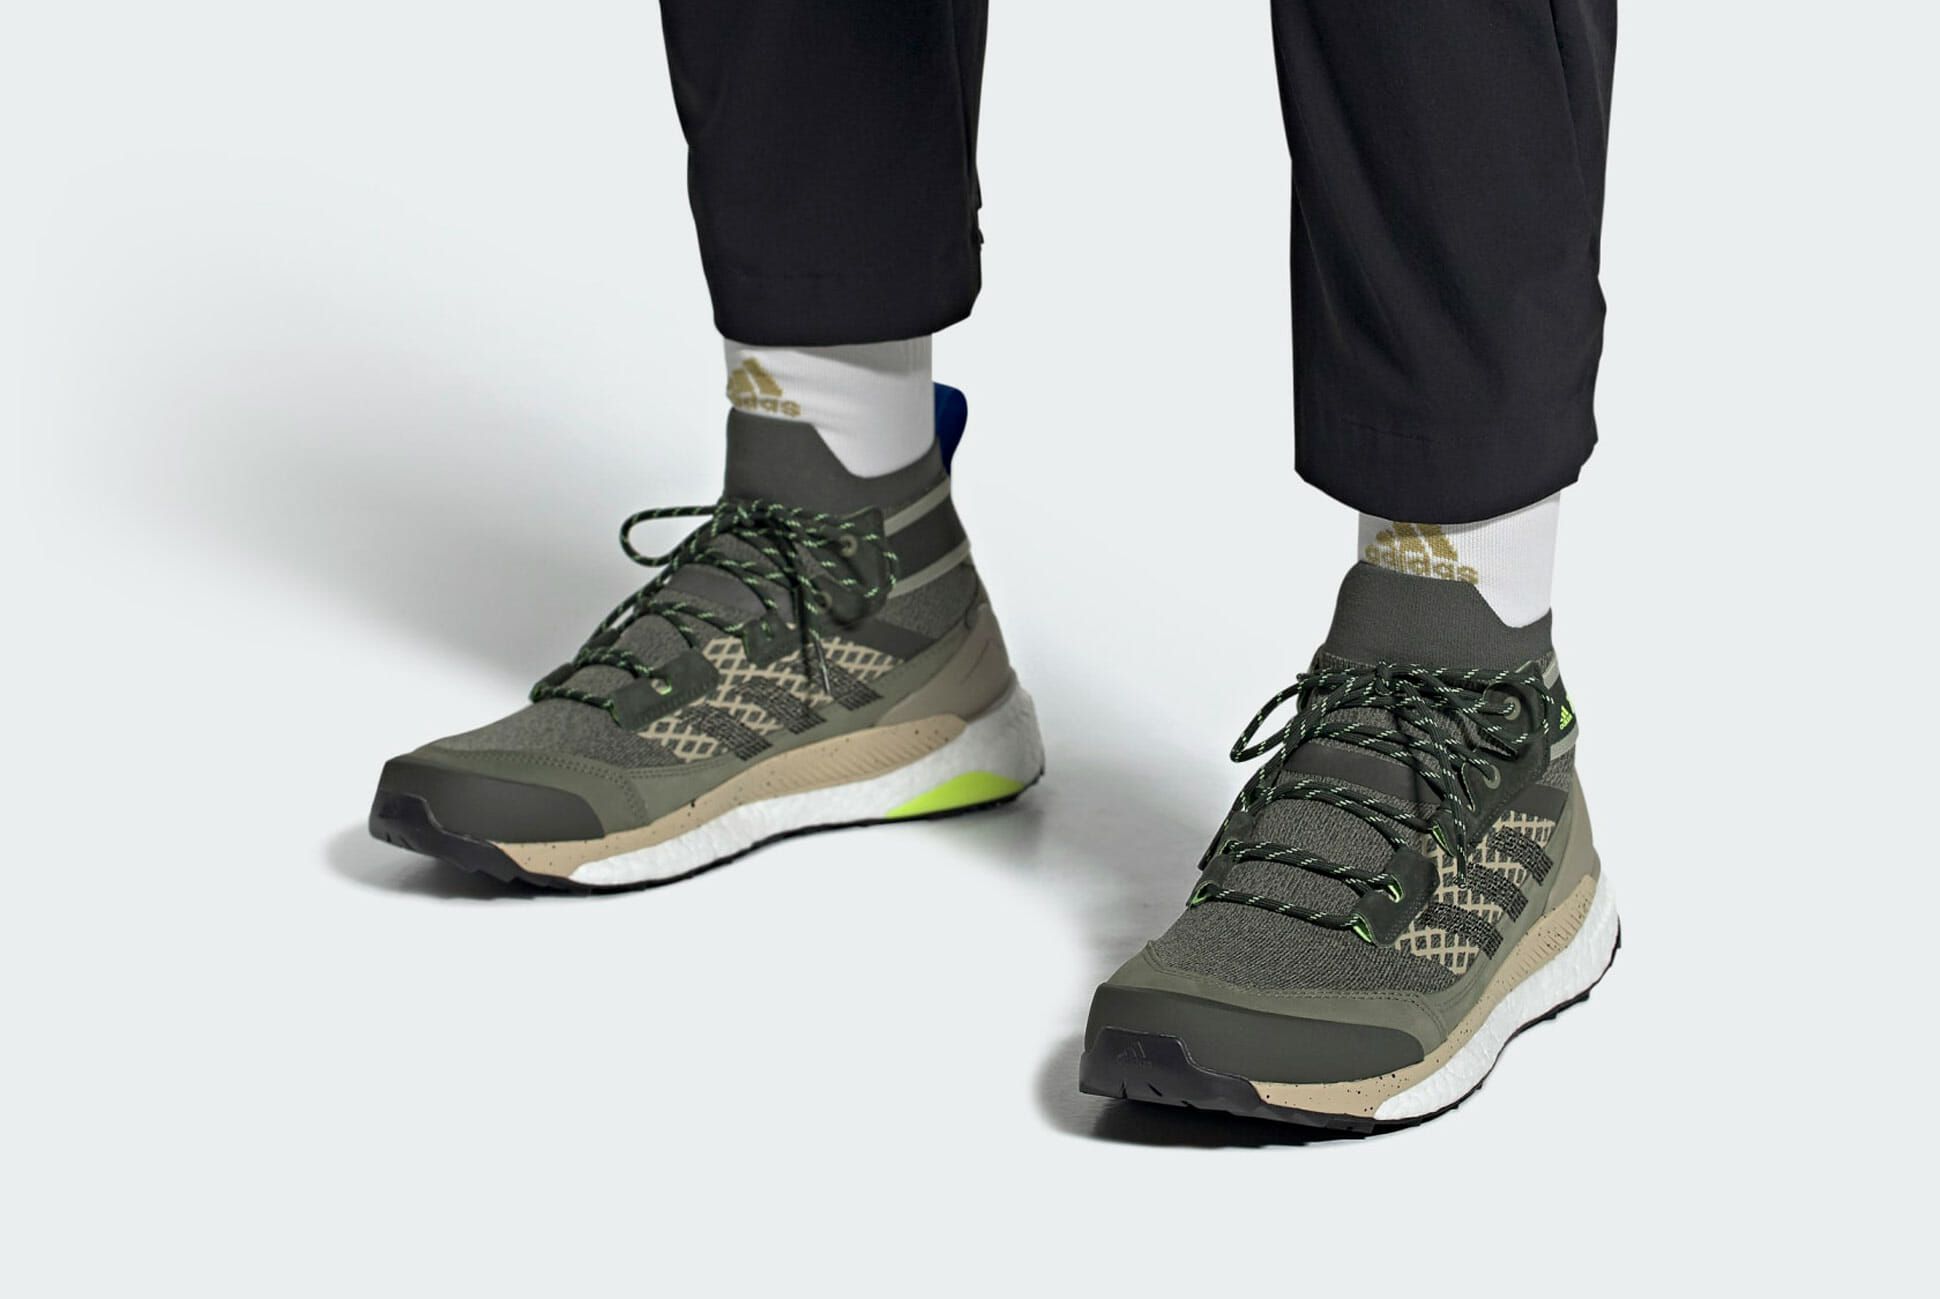 hiking shoes adidas